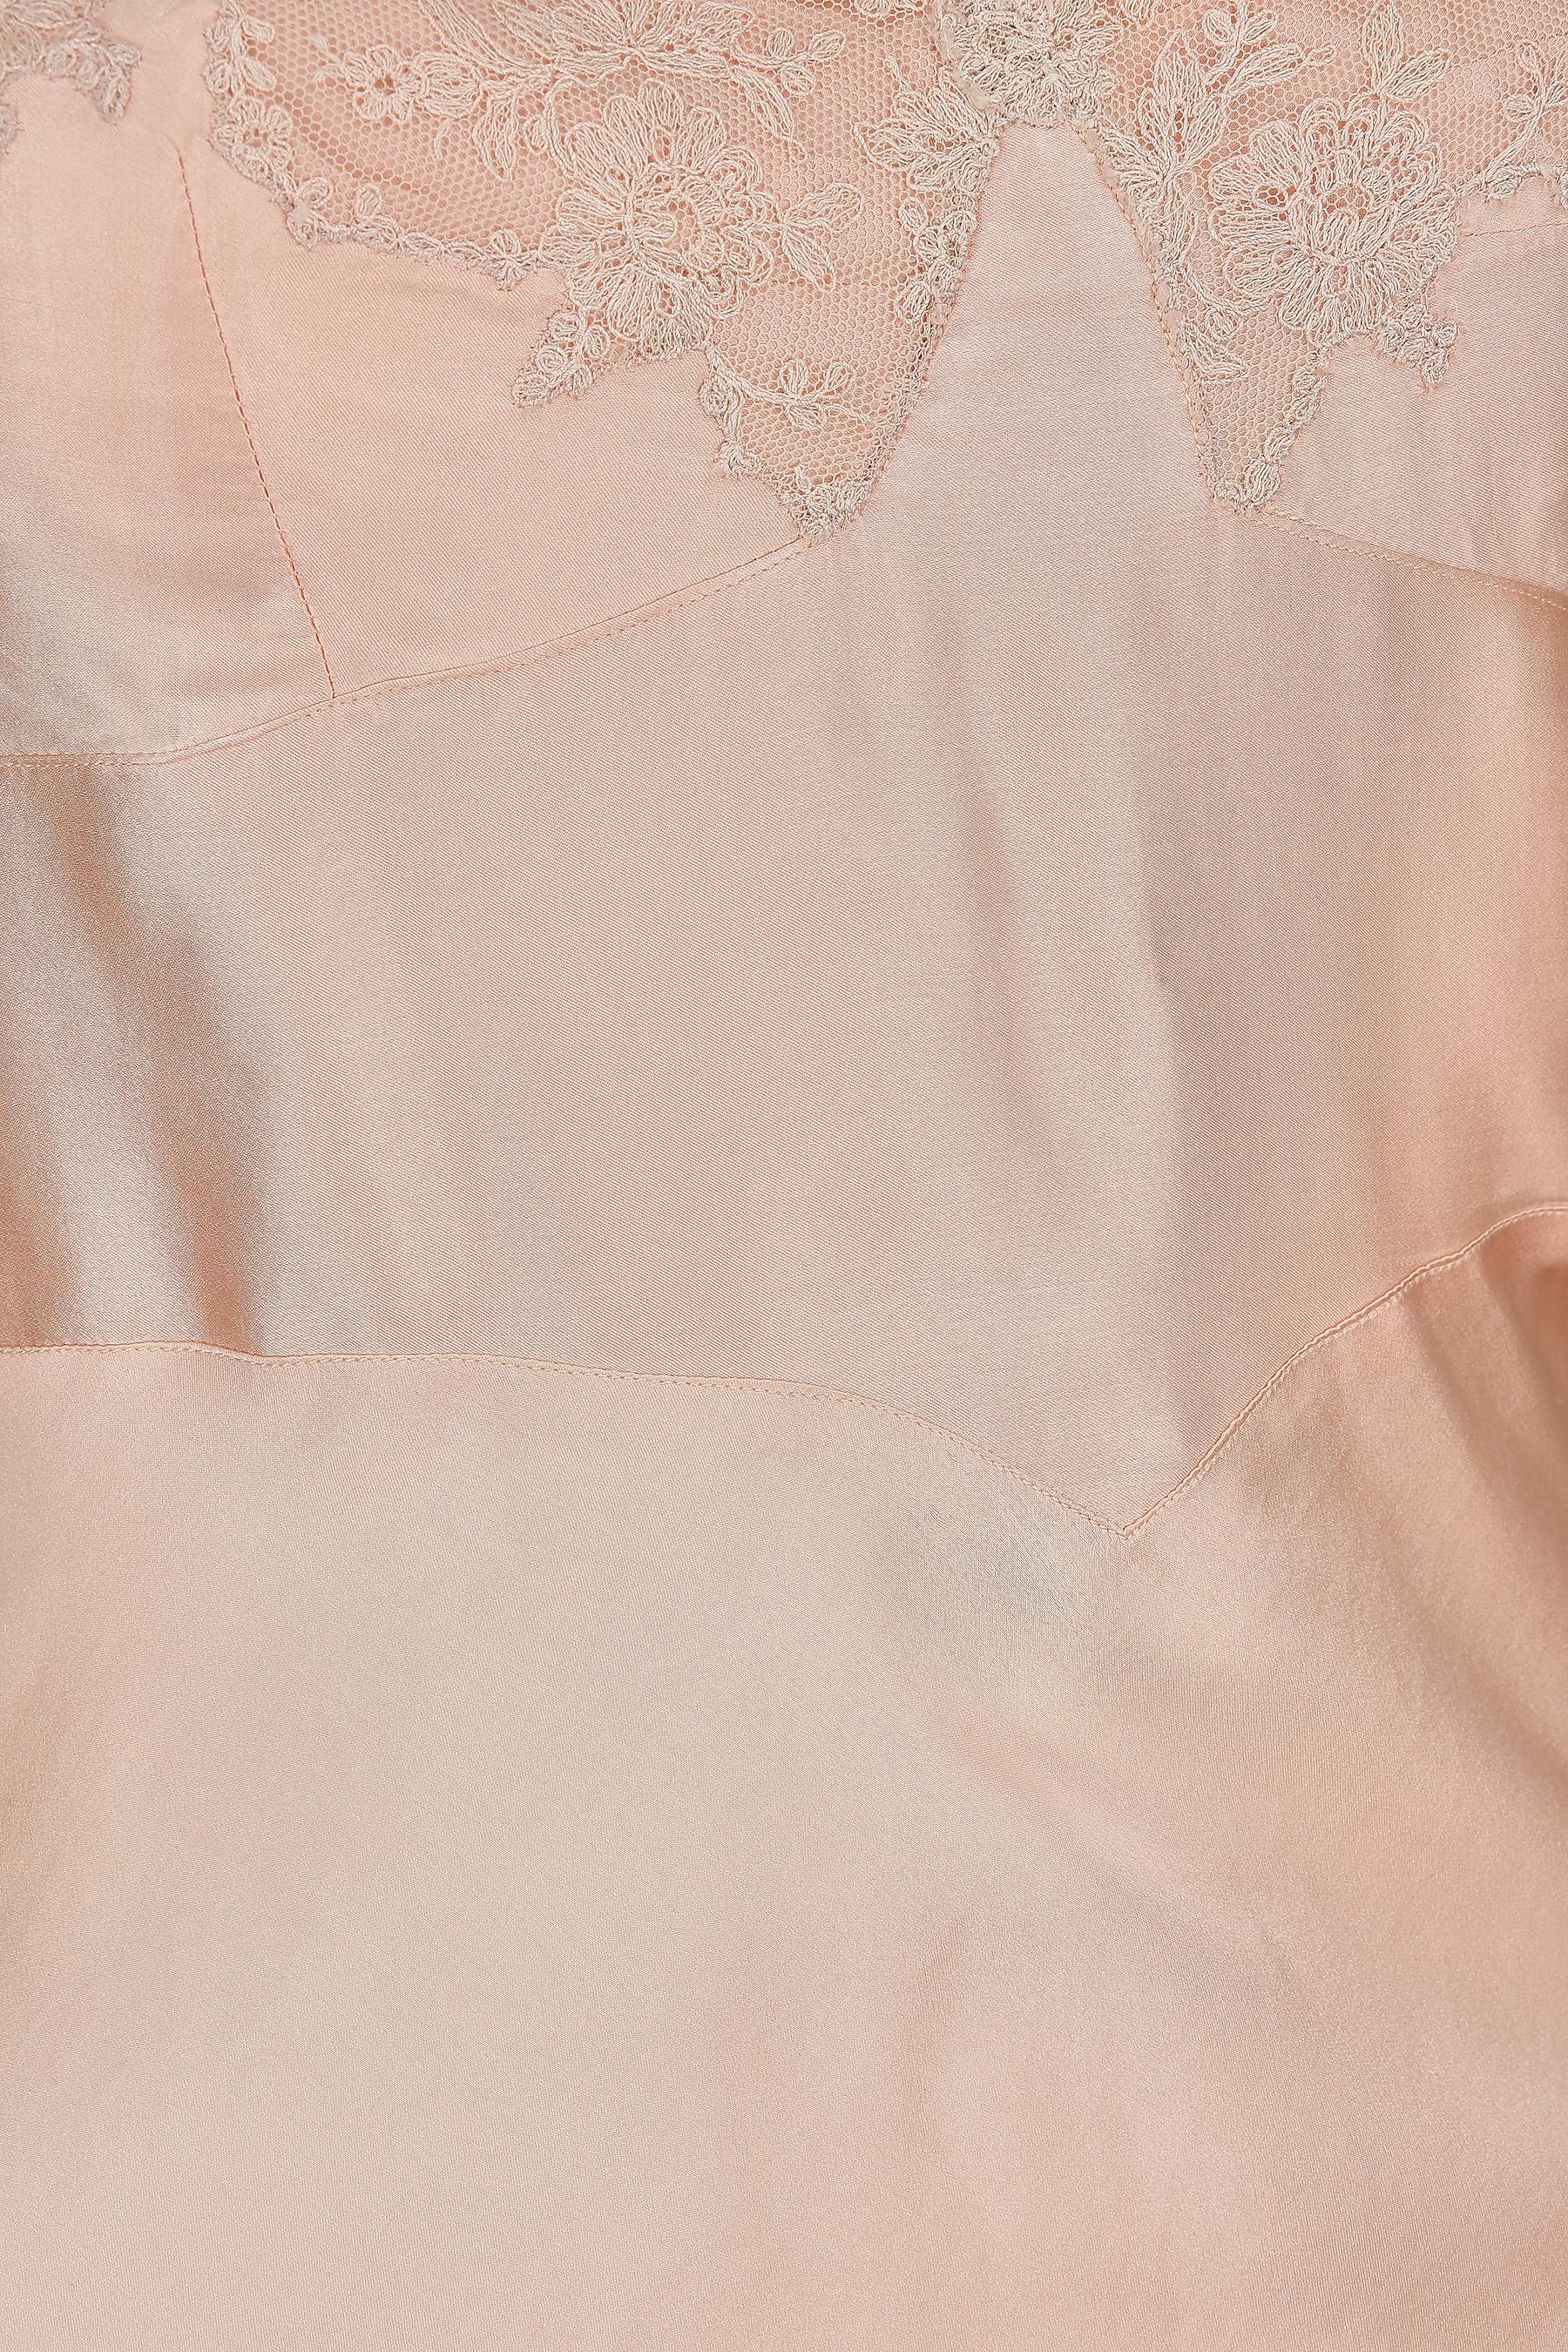 pink lace slip dress